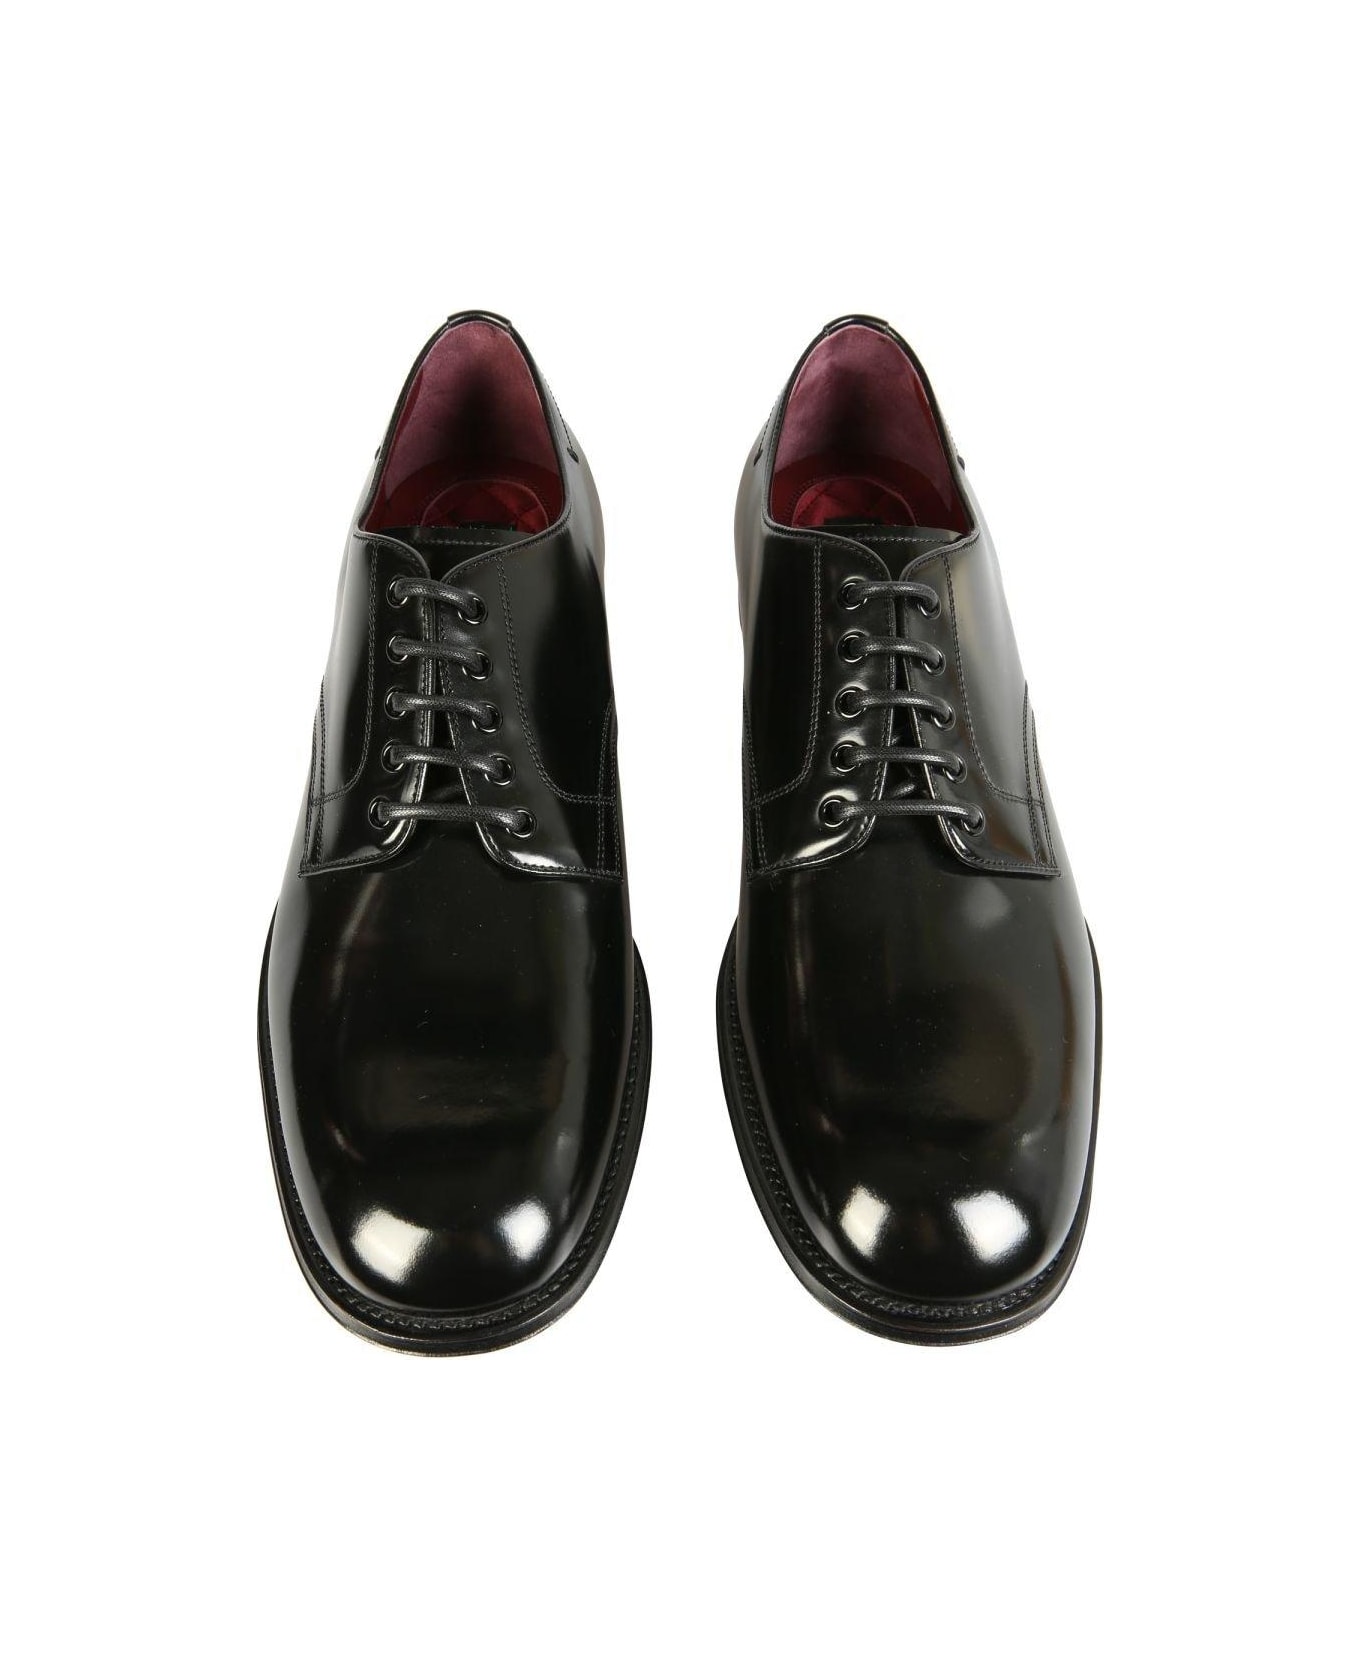 Dolce & Gabbana Classic Derby Shoes - Black